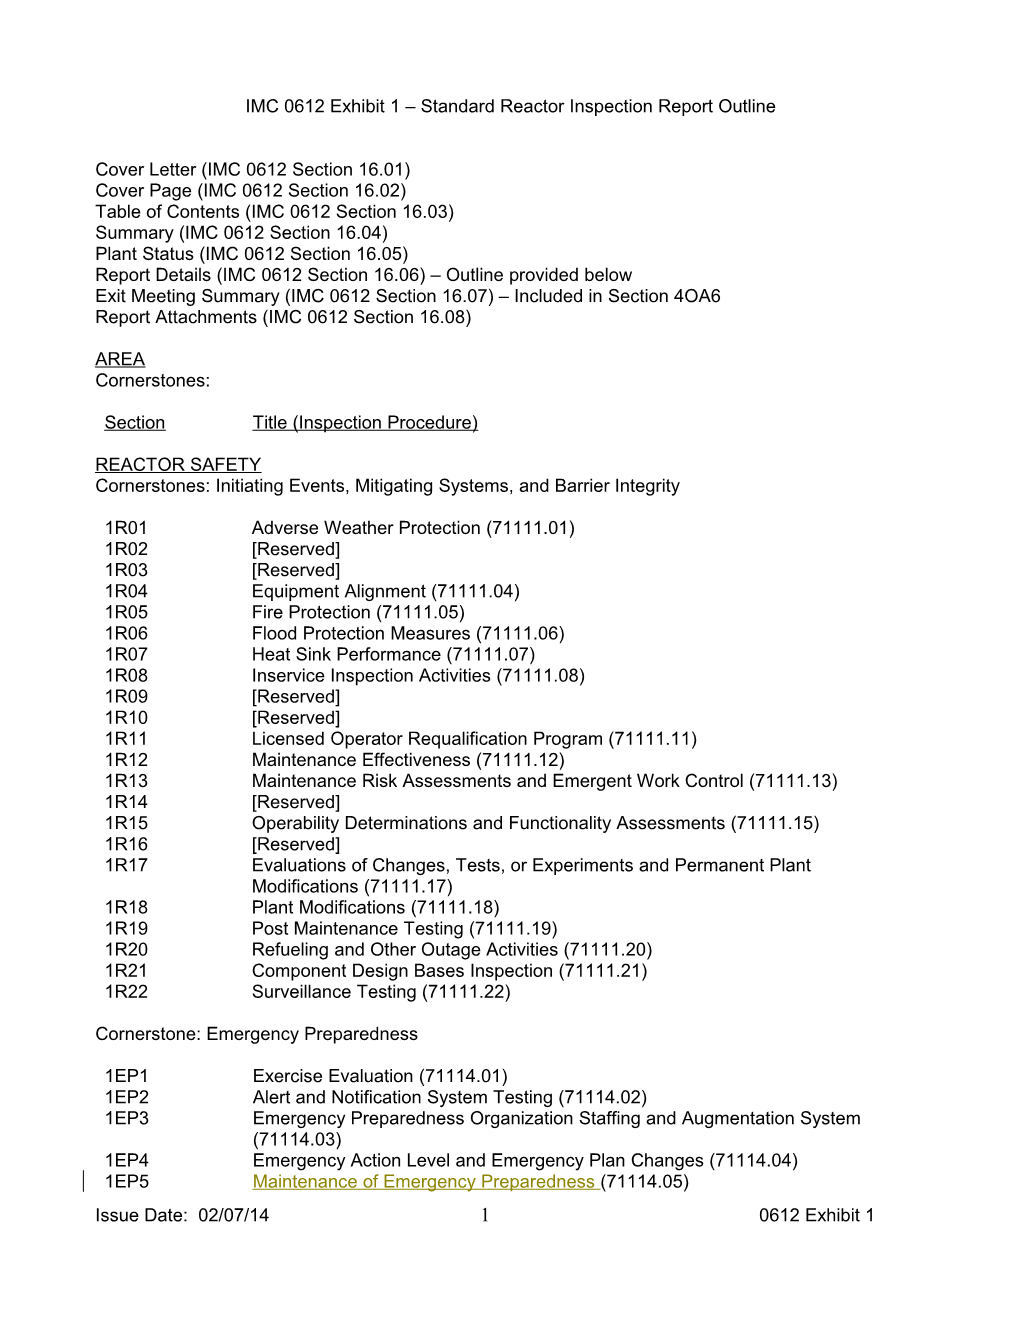 IMC0612 Exhibit1 Standard Reactor Inspection Report Outline